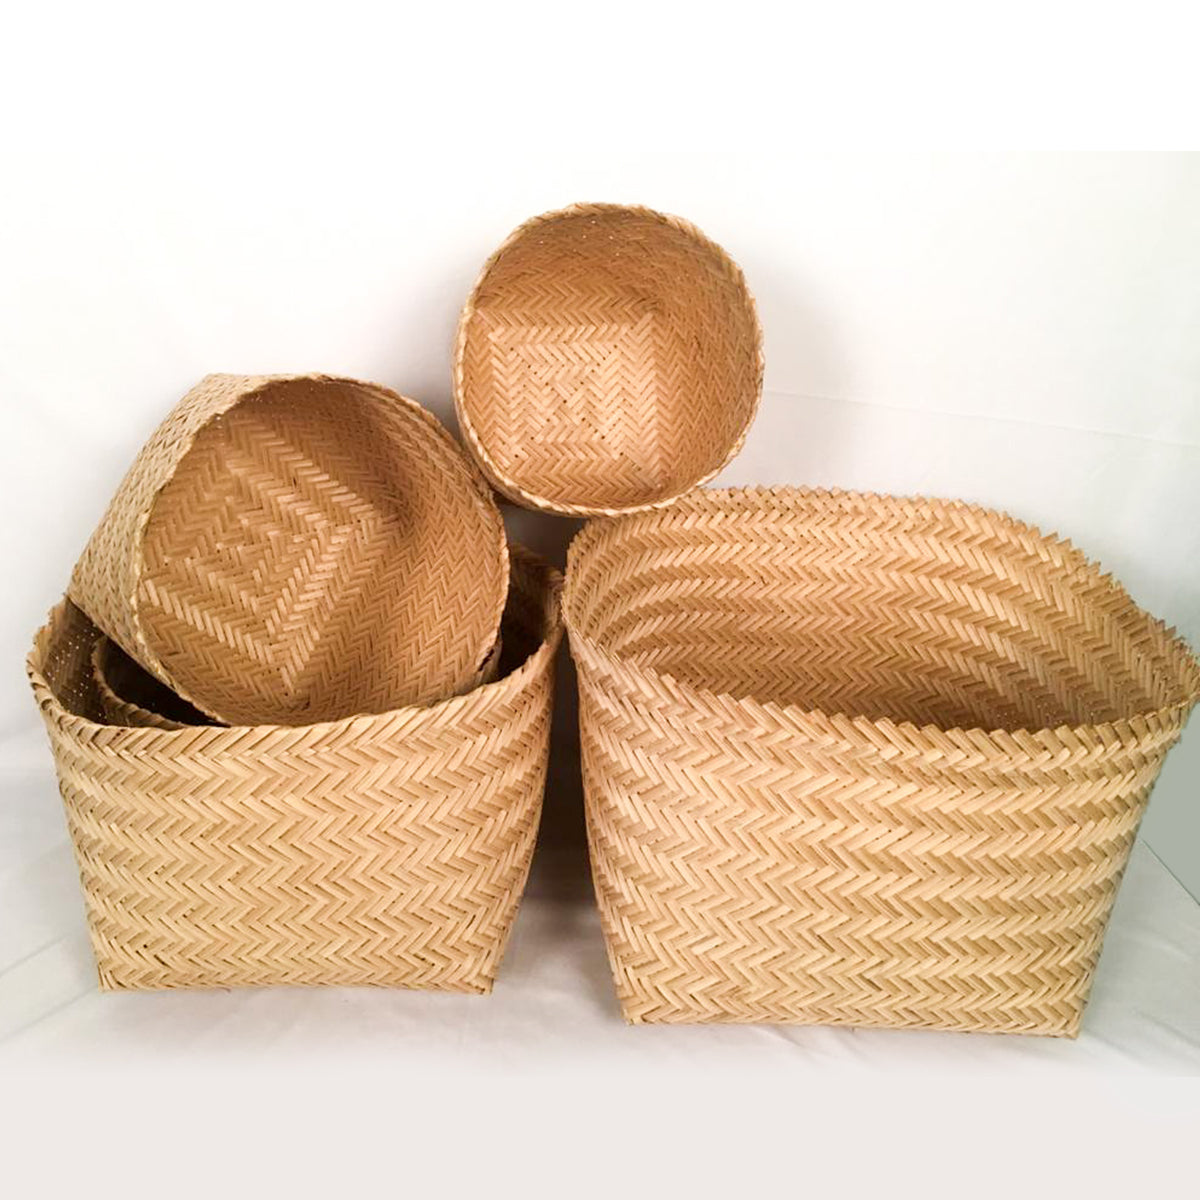 Bamboo Storage Baskets - Set of 5